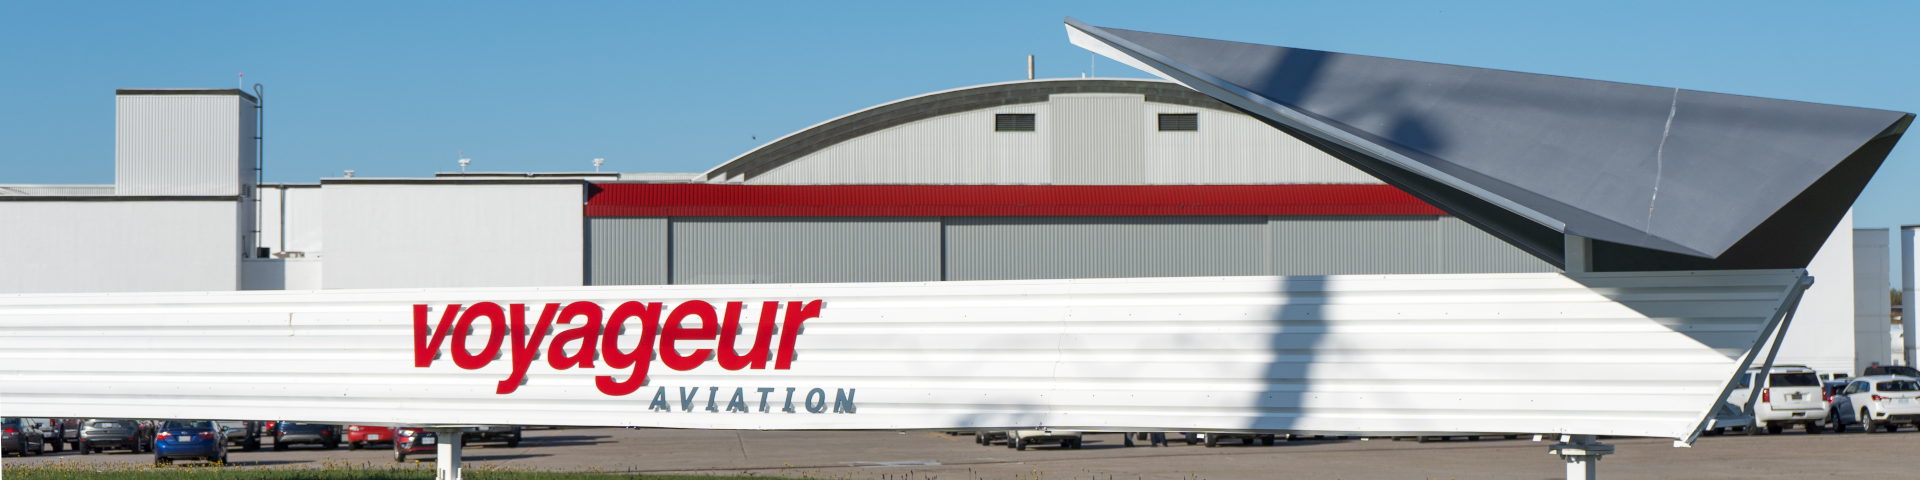 News Voyageur Aviation Corp